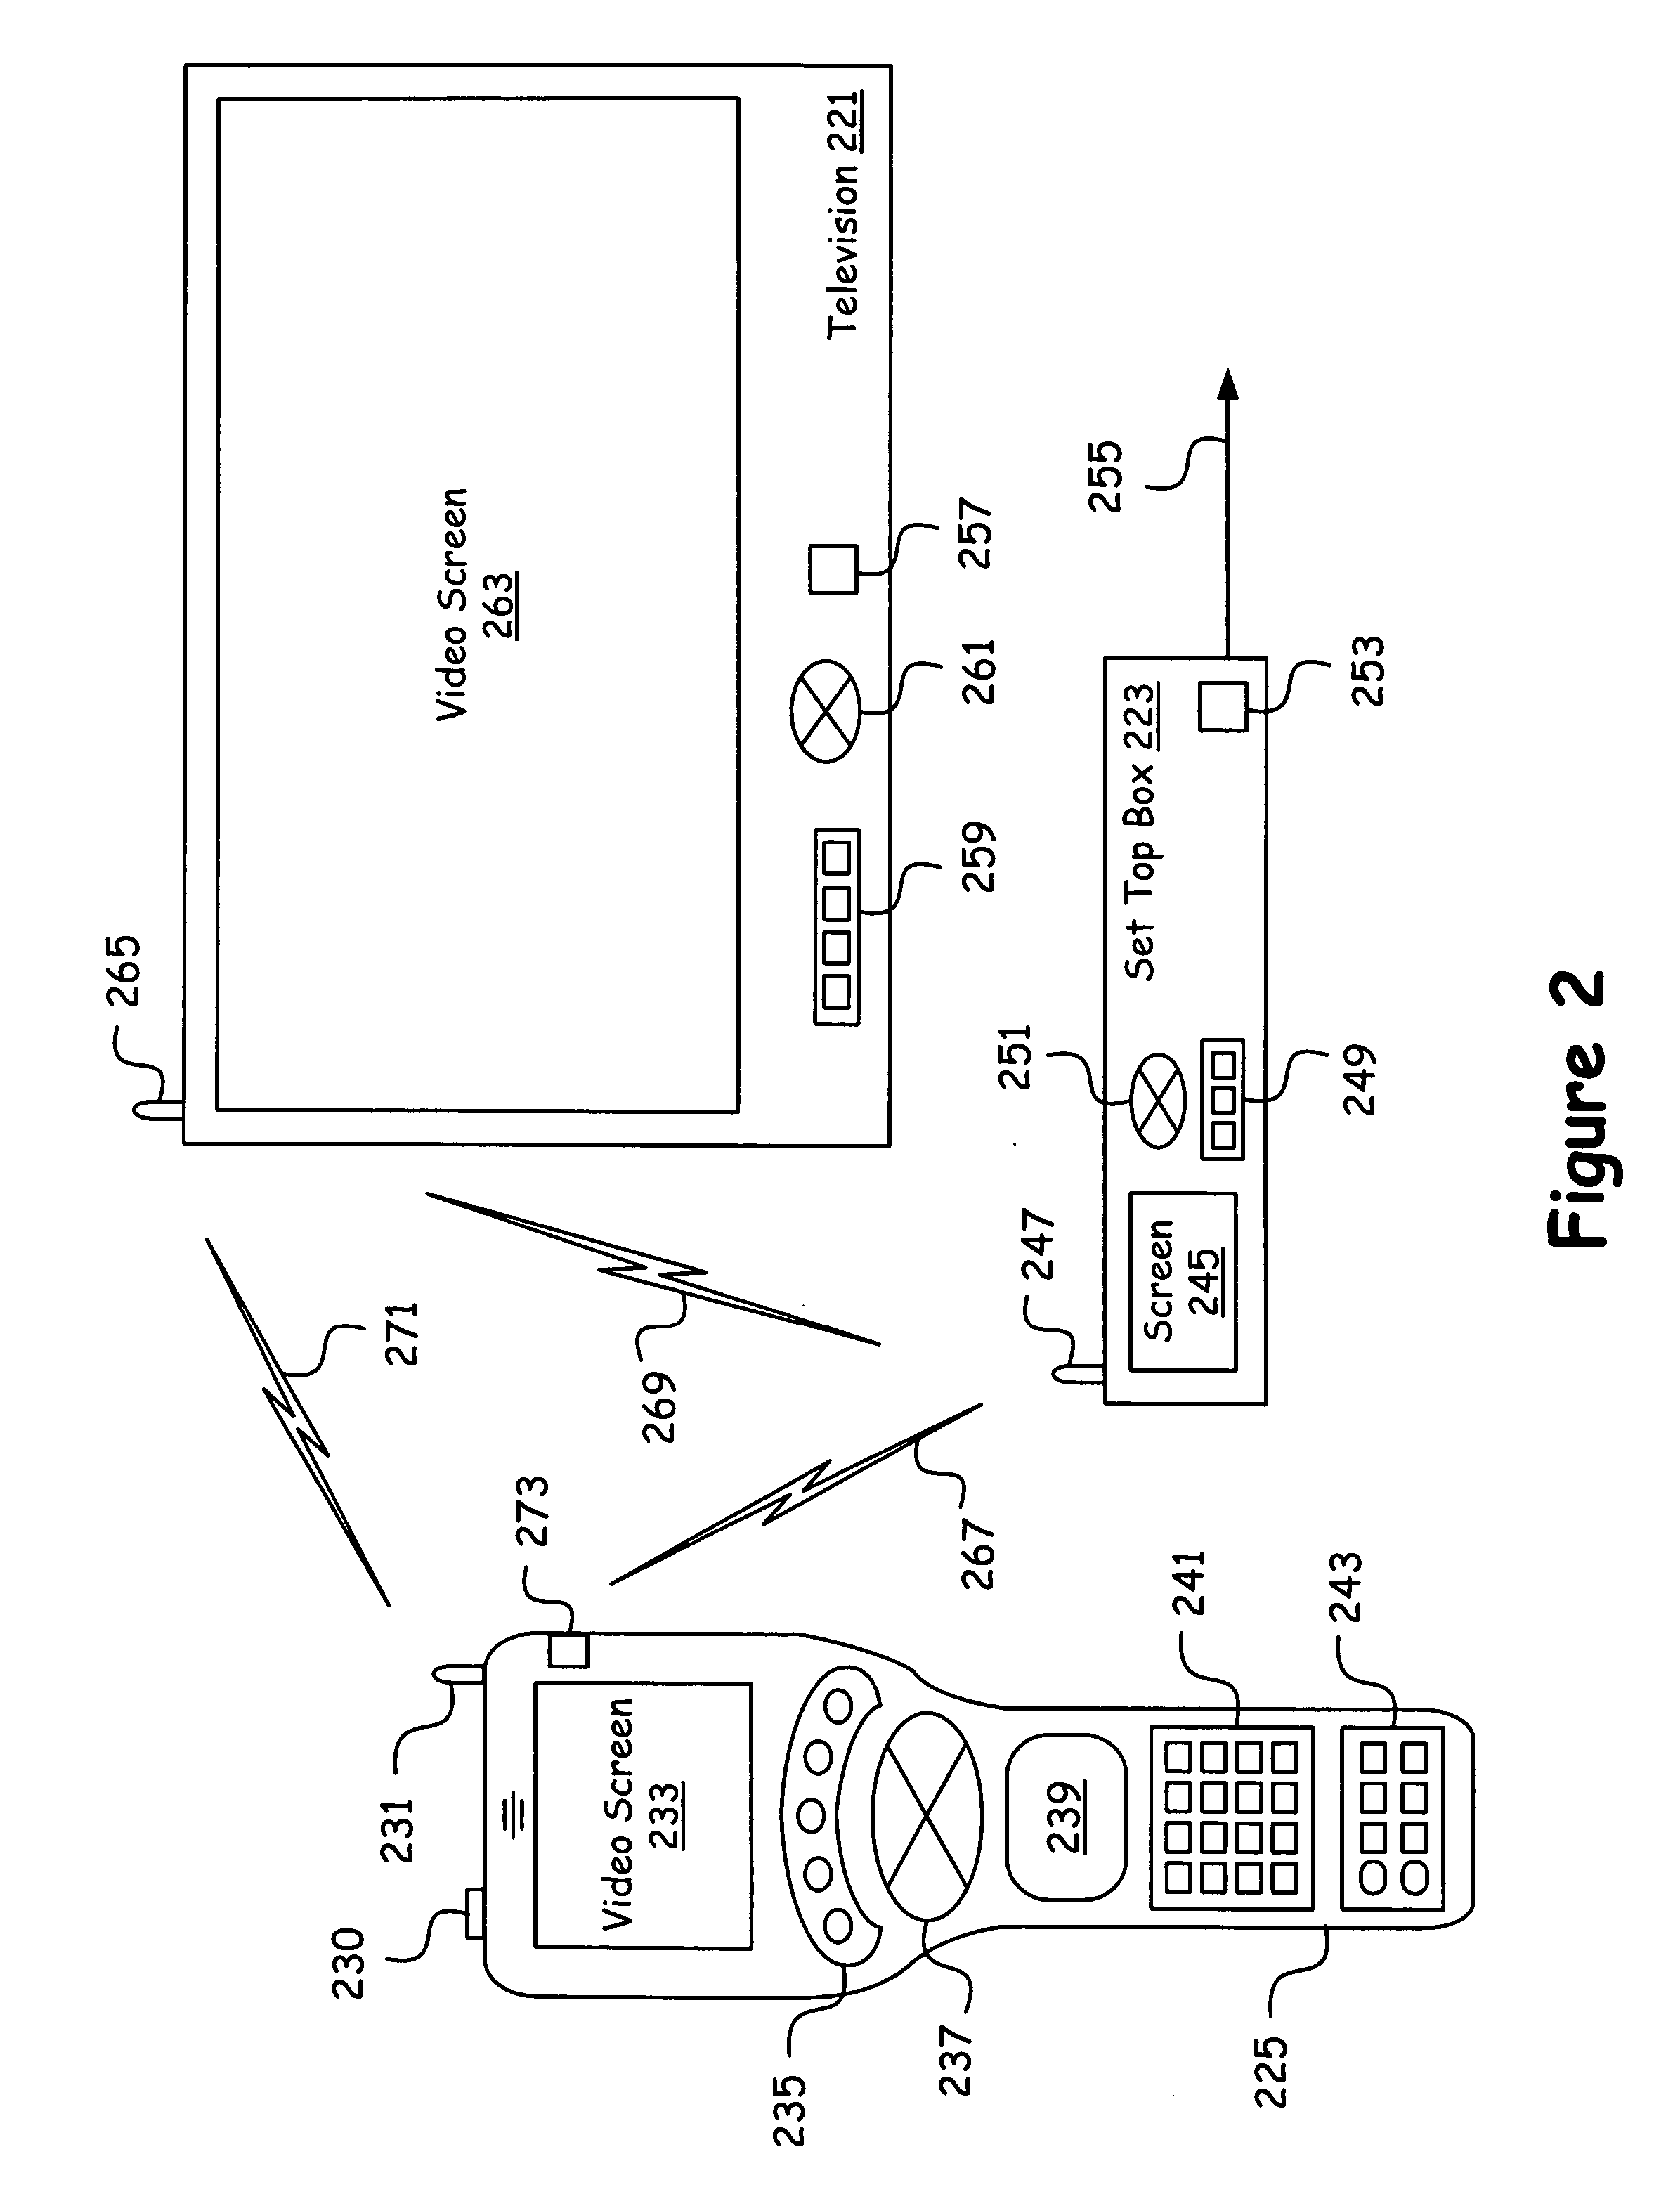 Parallel television remote control